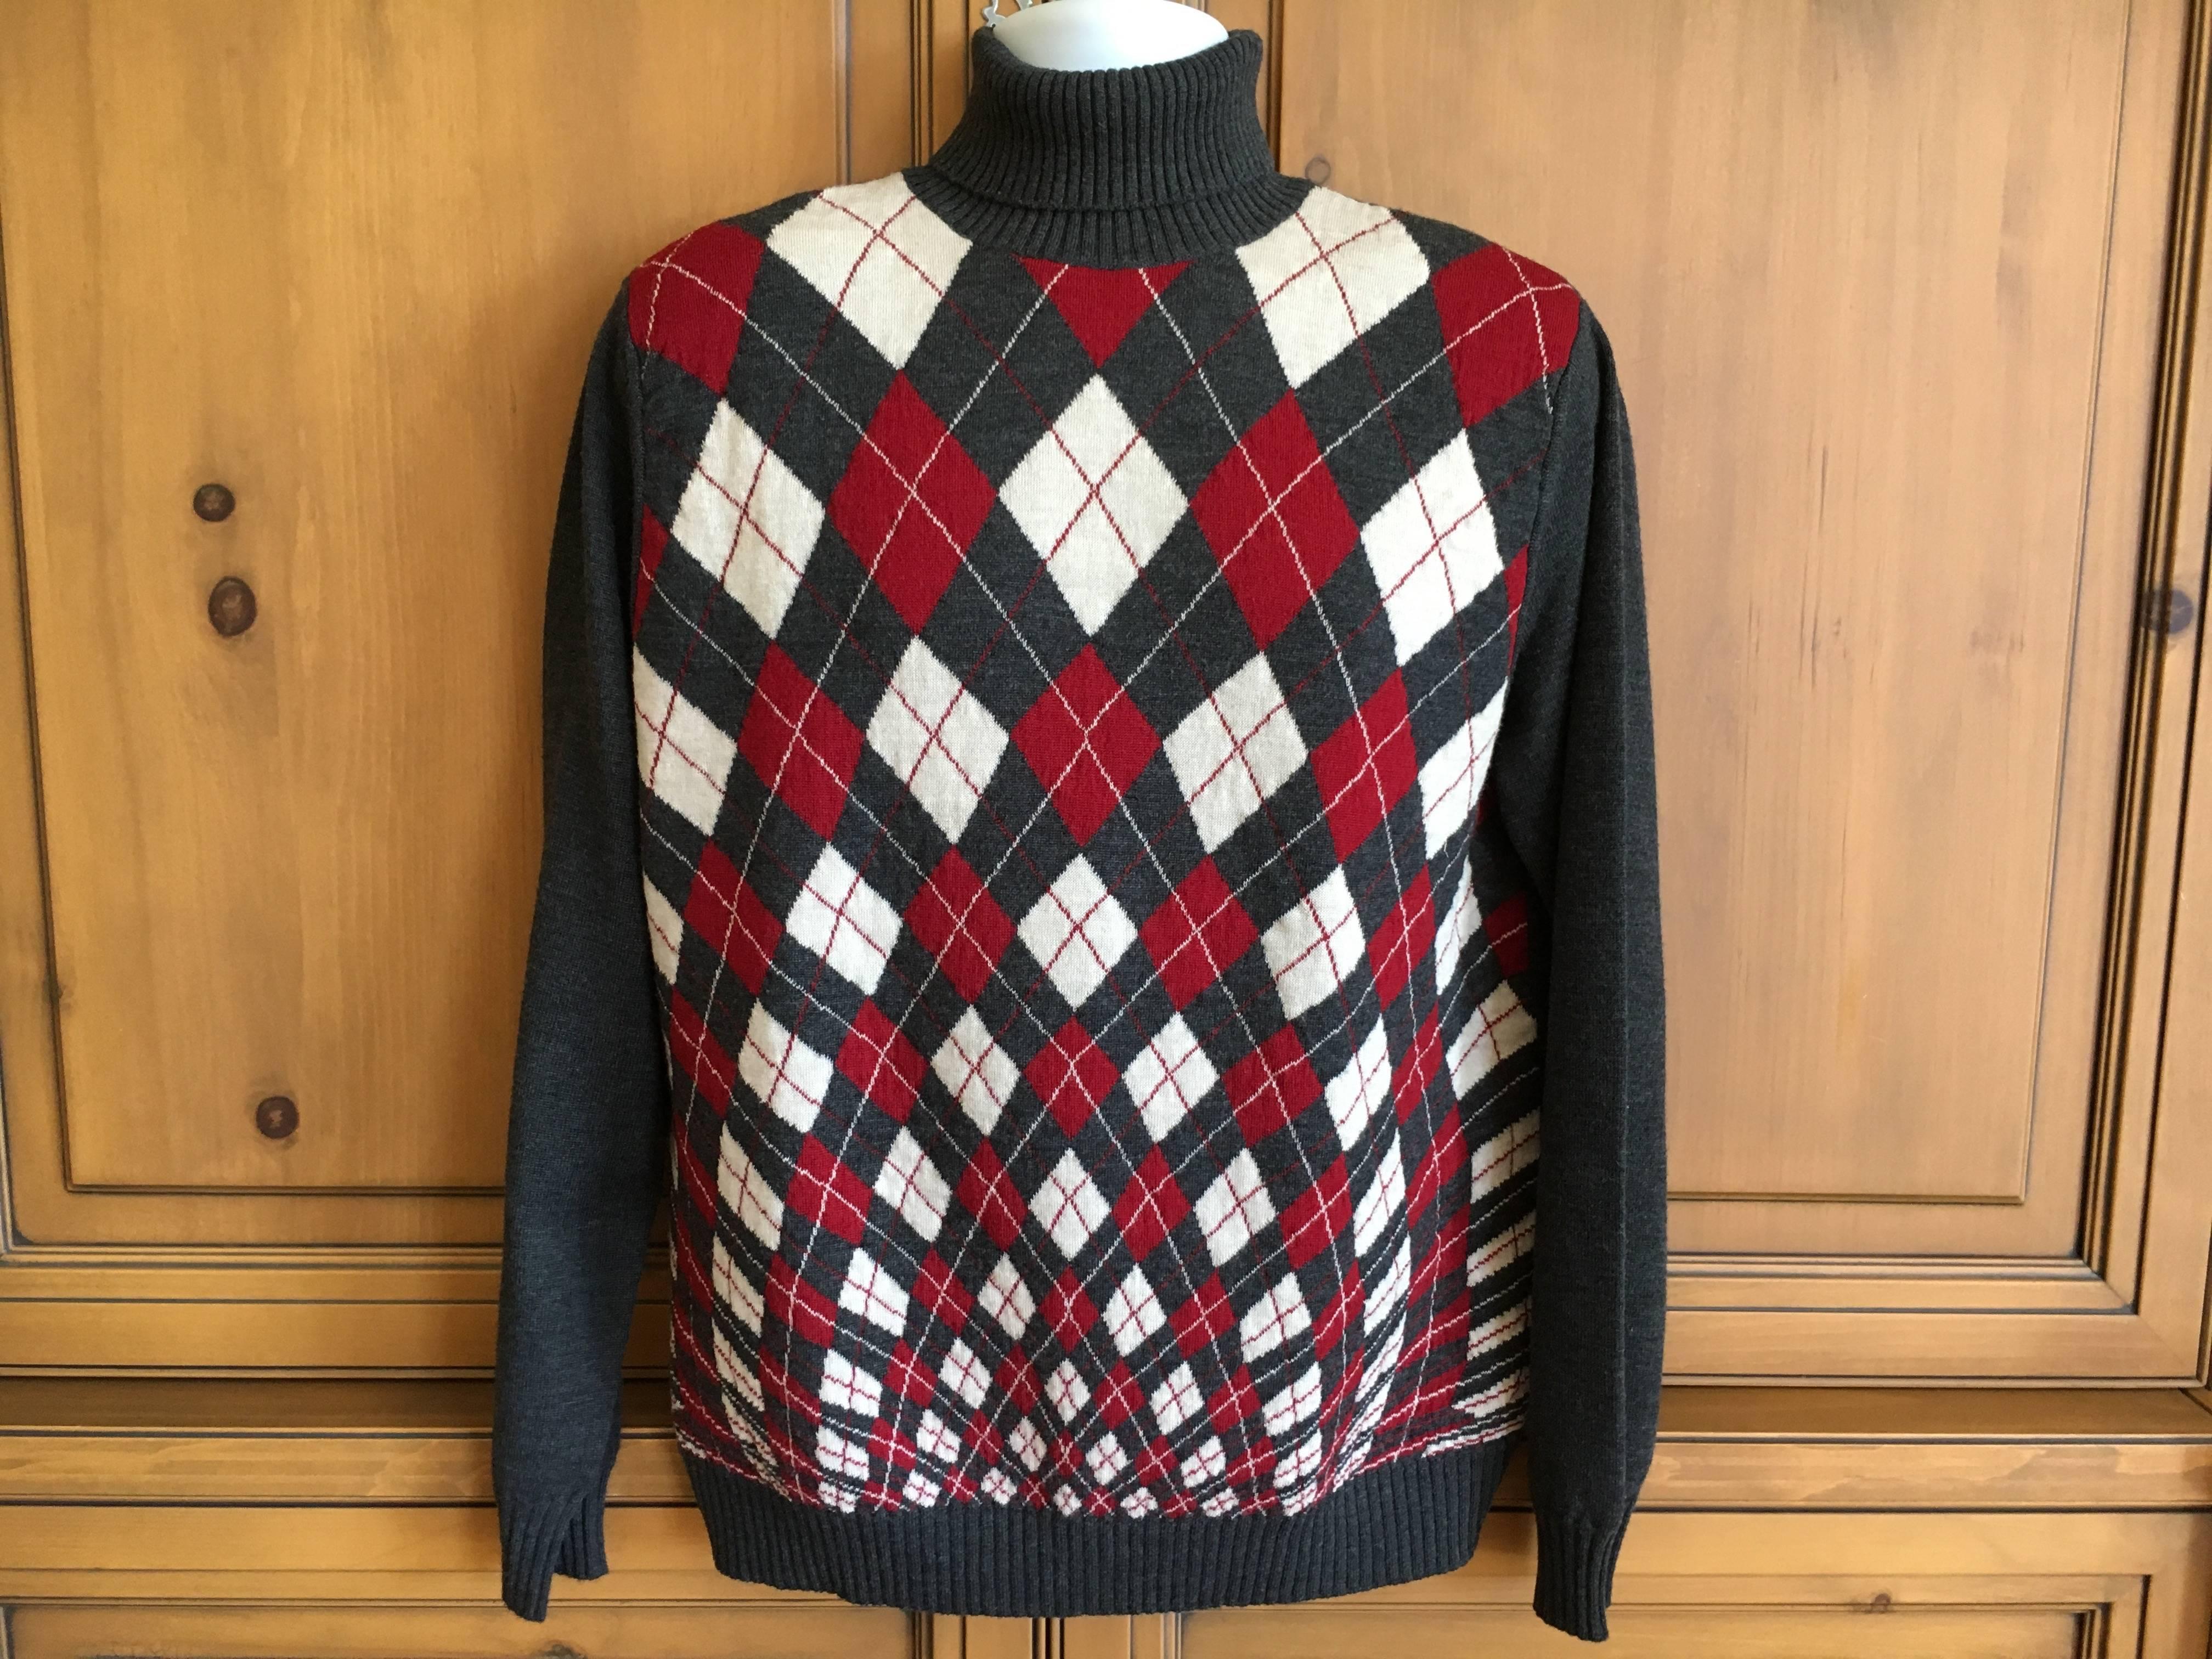 Jean Paul Gaultier Homme Argyle Sweater
Wool
Size M
Chest 46"
Length 24"
Excellent conditon